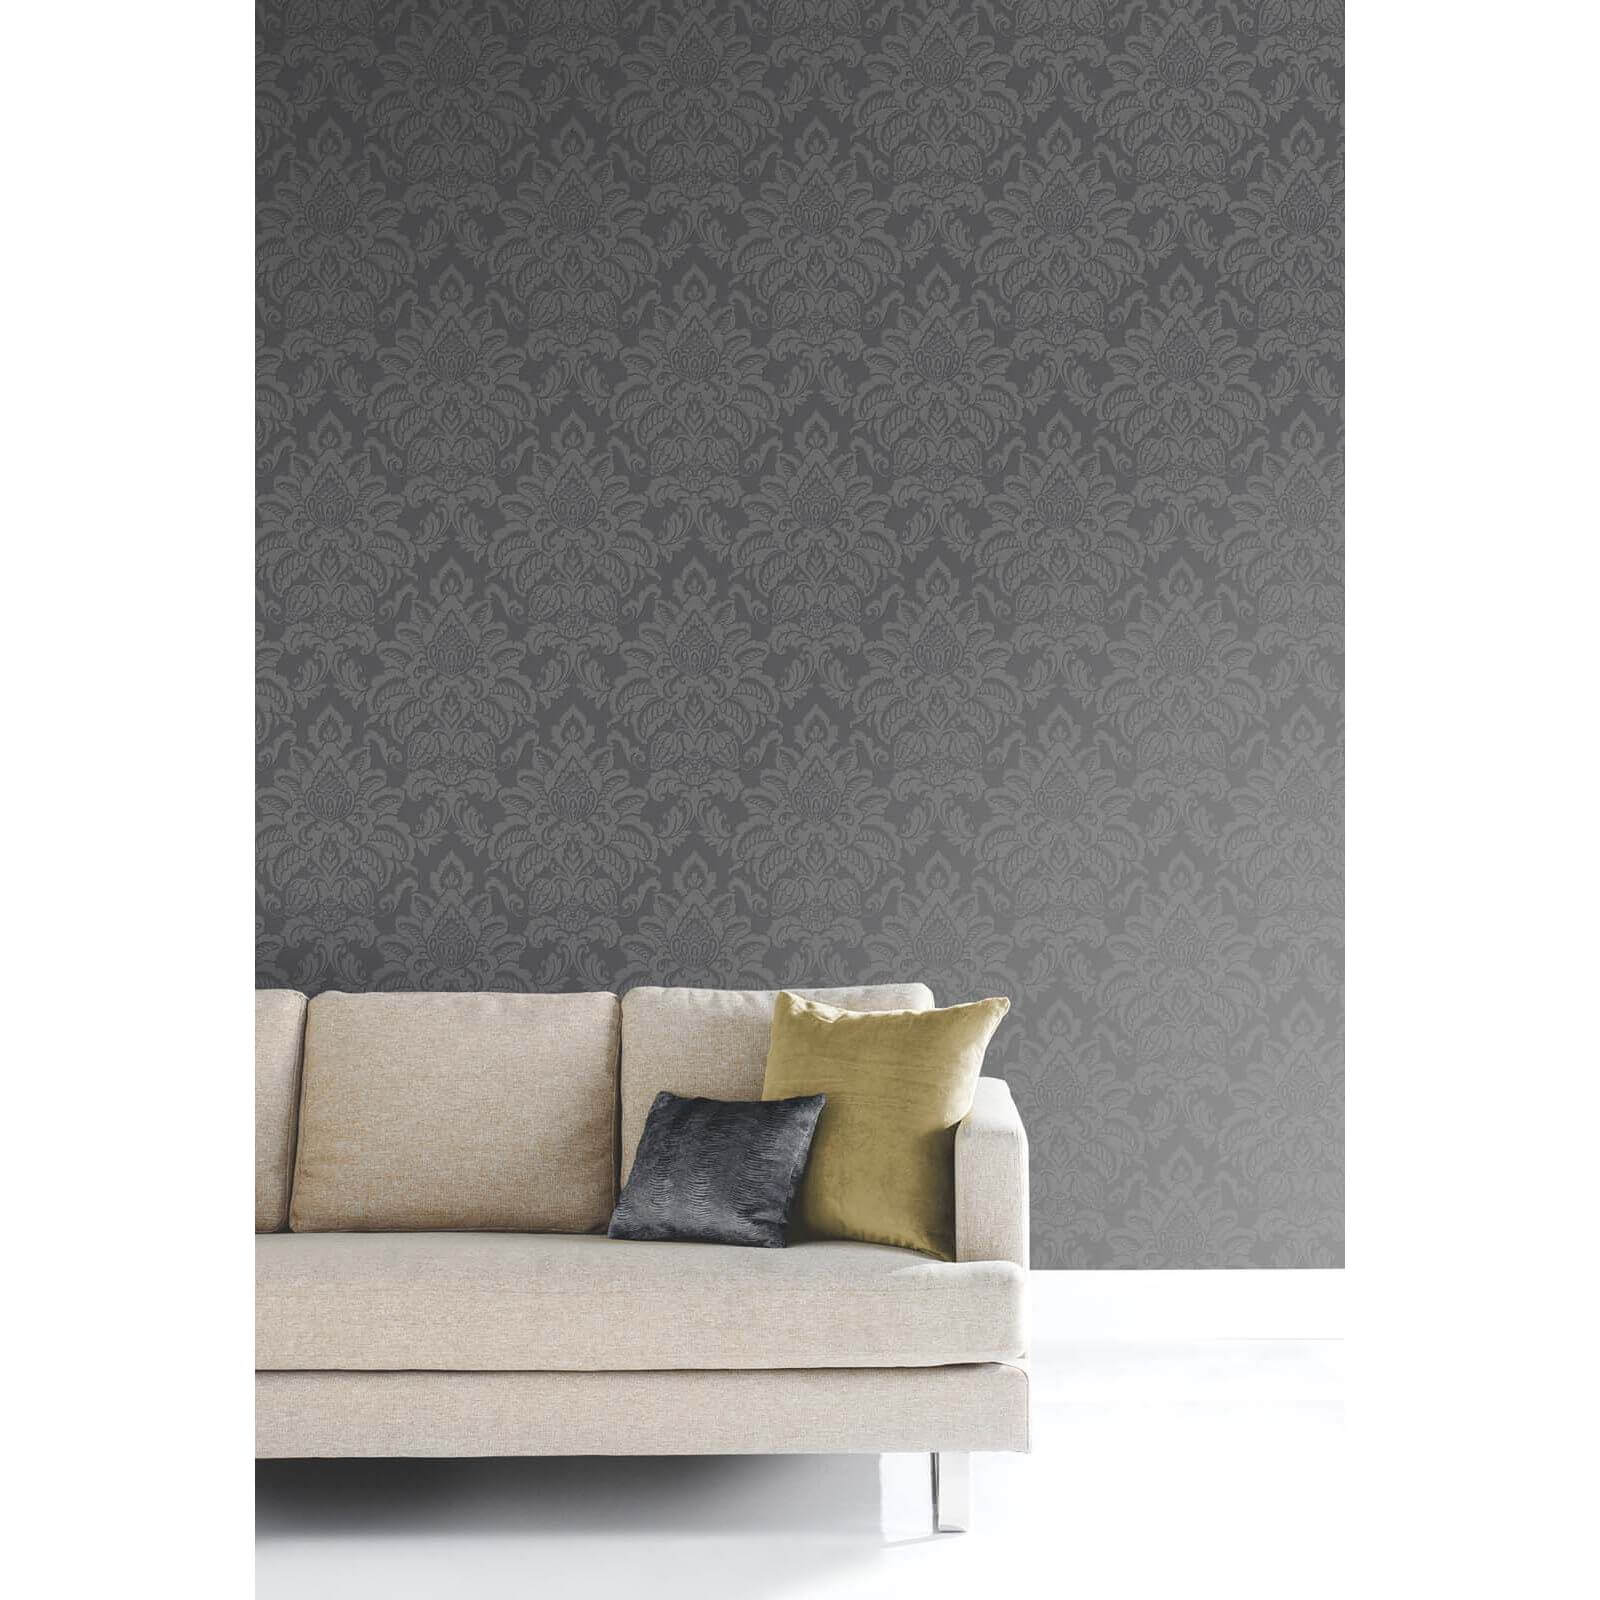 Arthouse Precious Metals Glisten Damask Textured Glitter Gunmetal Grey Wallpaper